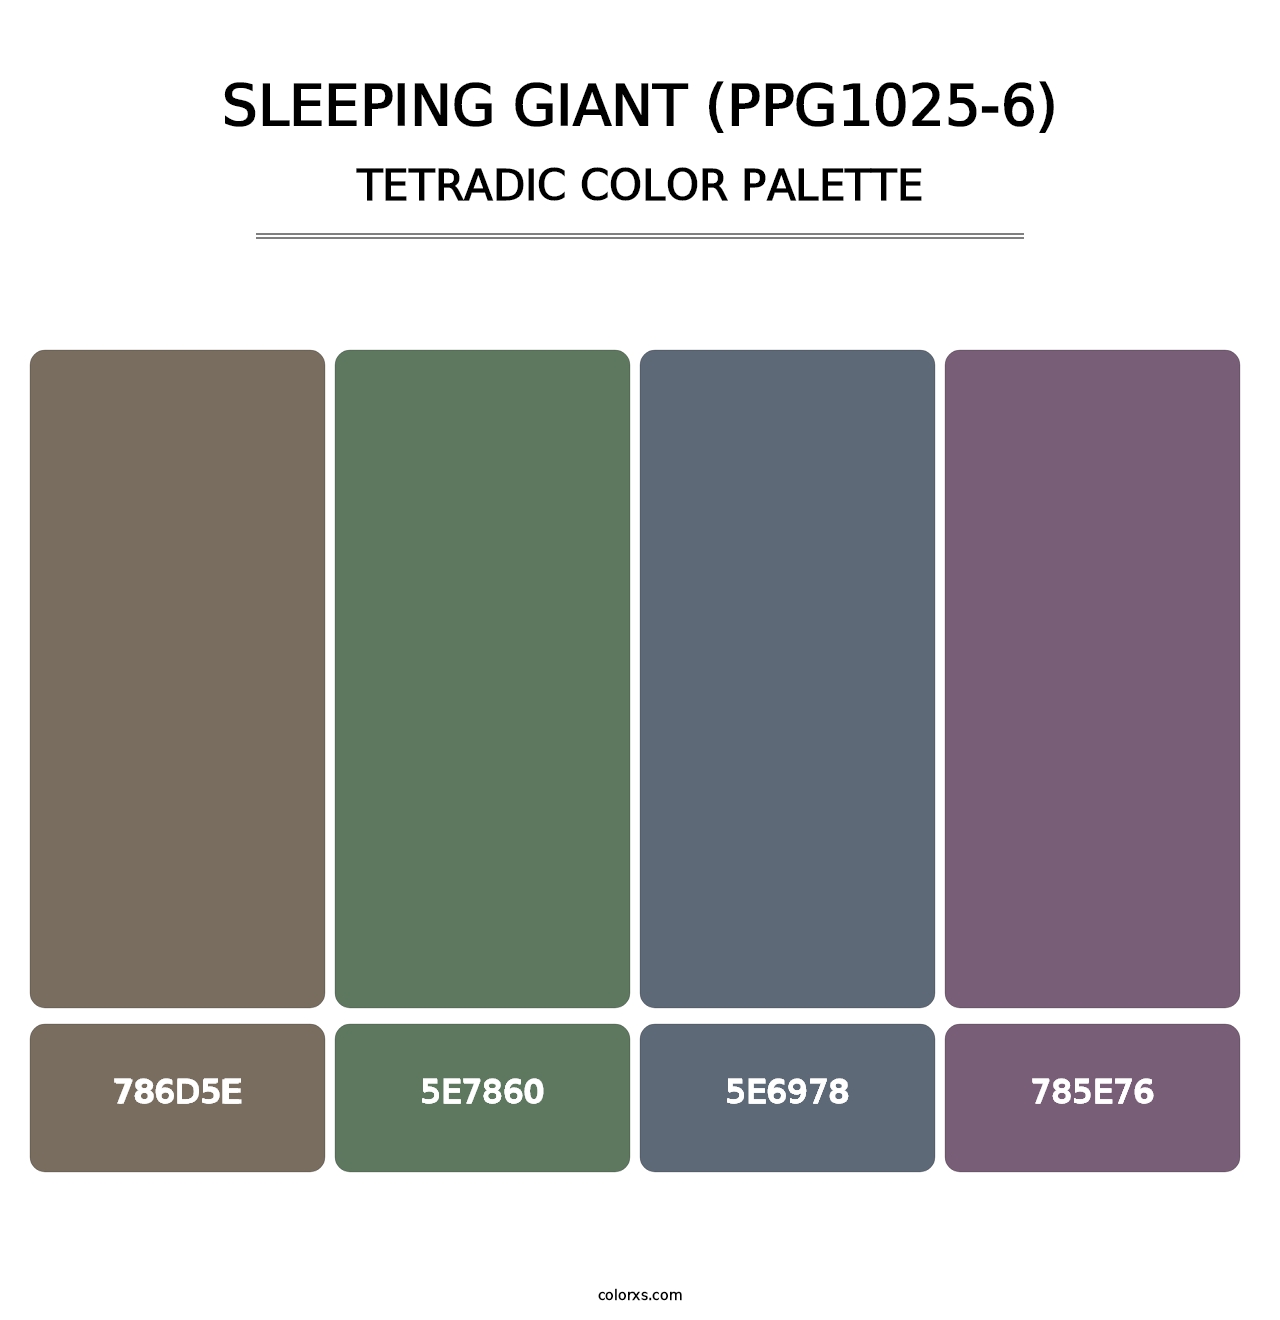 Sleeping Giant (PPG1025-6) - Tetradic Color Palette